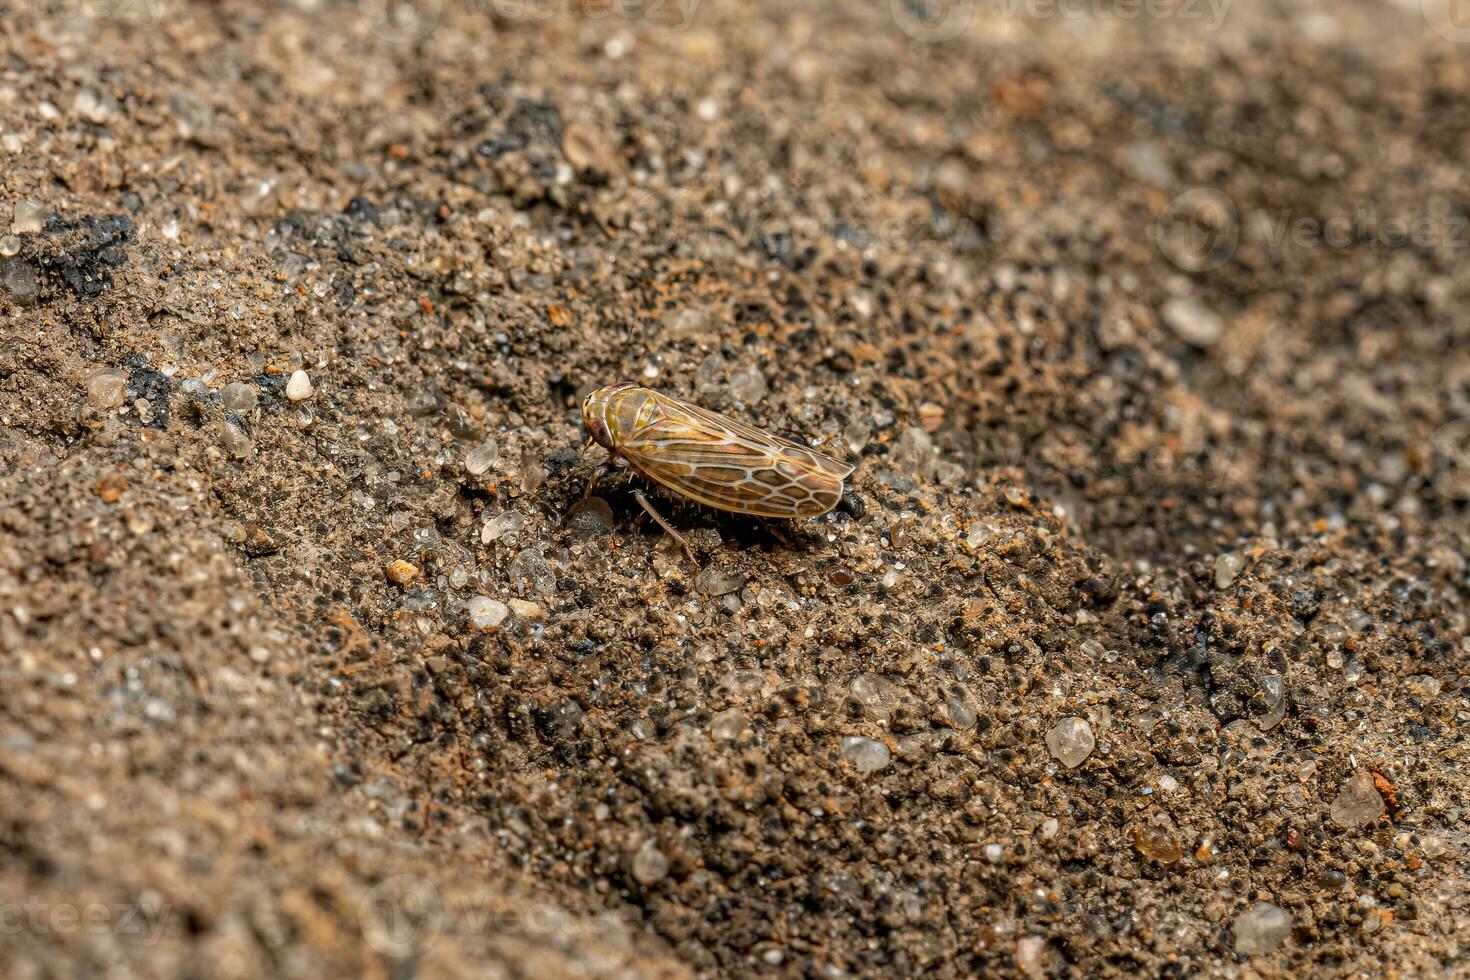 petite cicadelle adulte typique photo